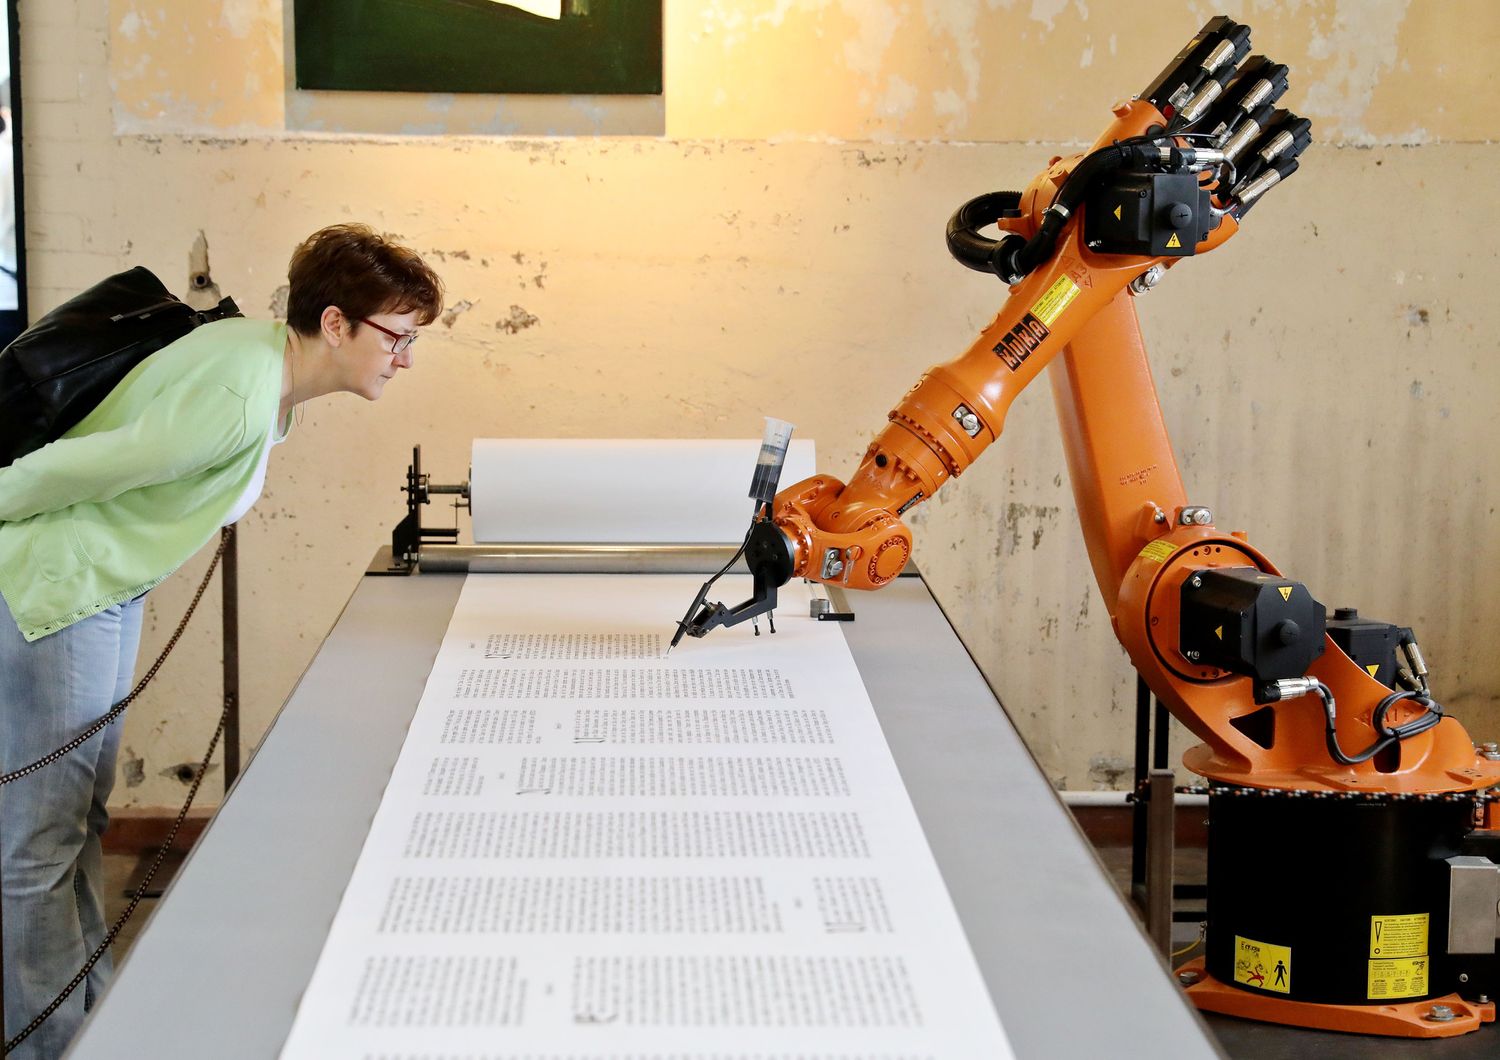 Un robot scrive una pergamena